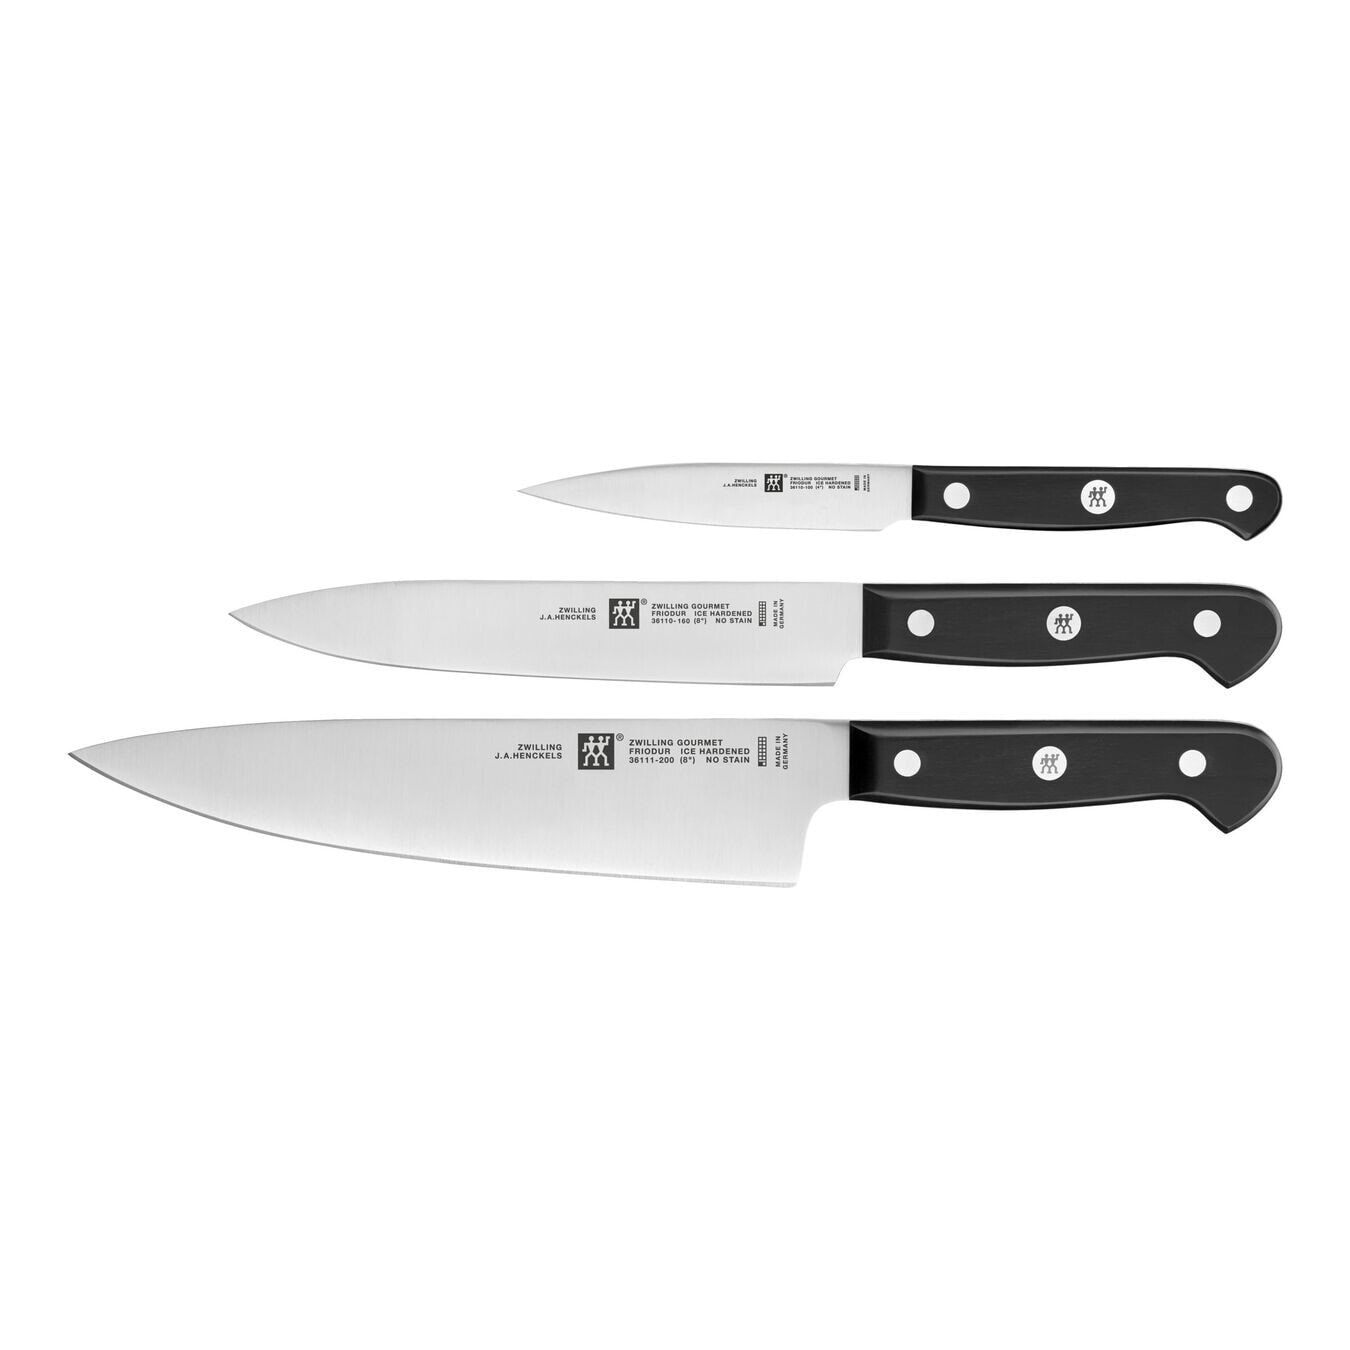 Zwilling Gourmet - Knife set - Steel - Plastic - Stainless steel - Black - Ergonomic